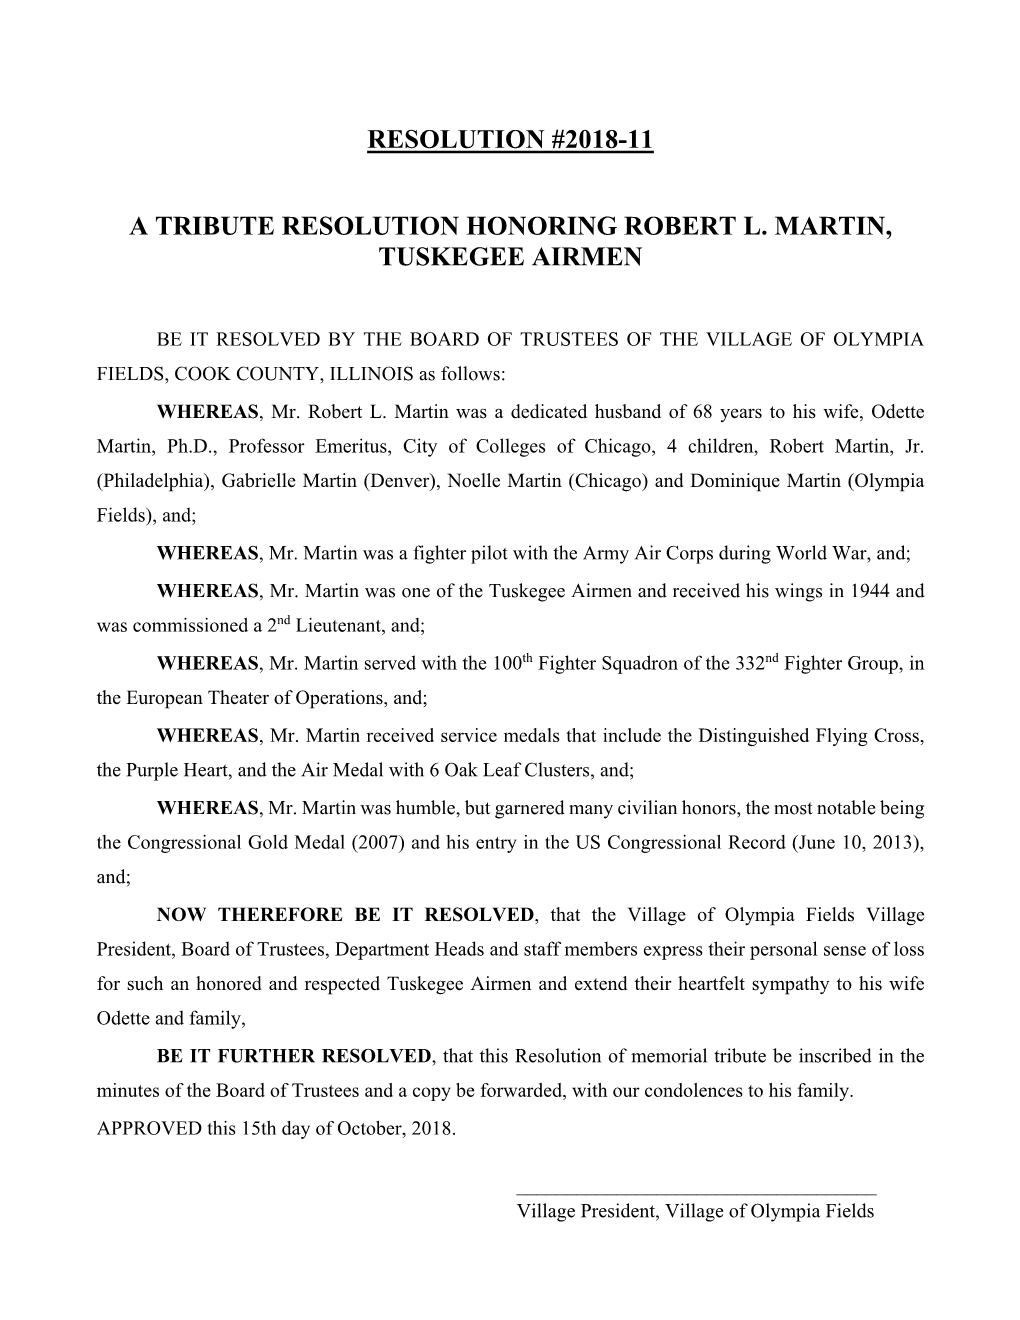 Resolution #2018-11 a Tribute Resolution Honoring Robert L. Martin